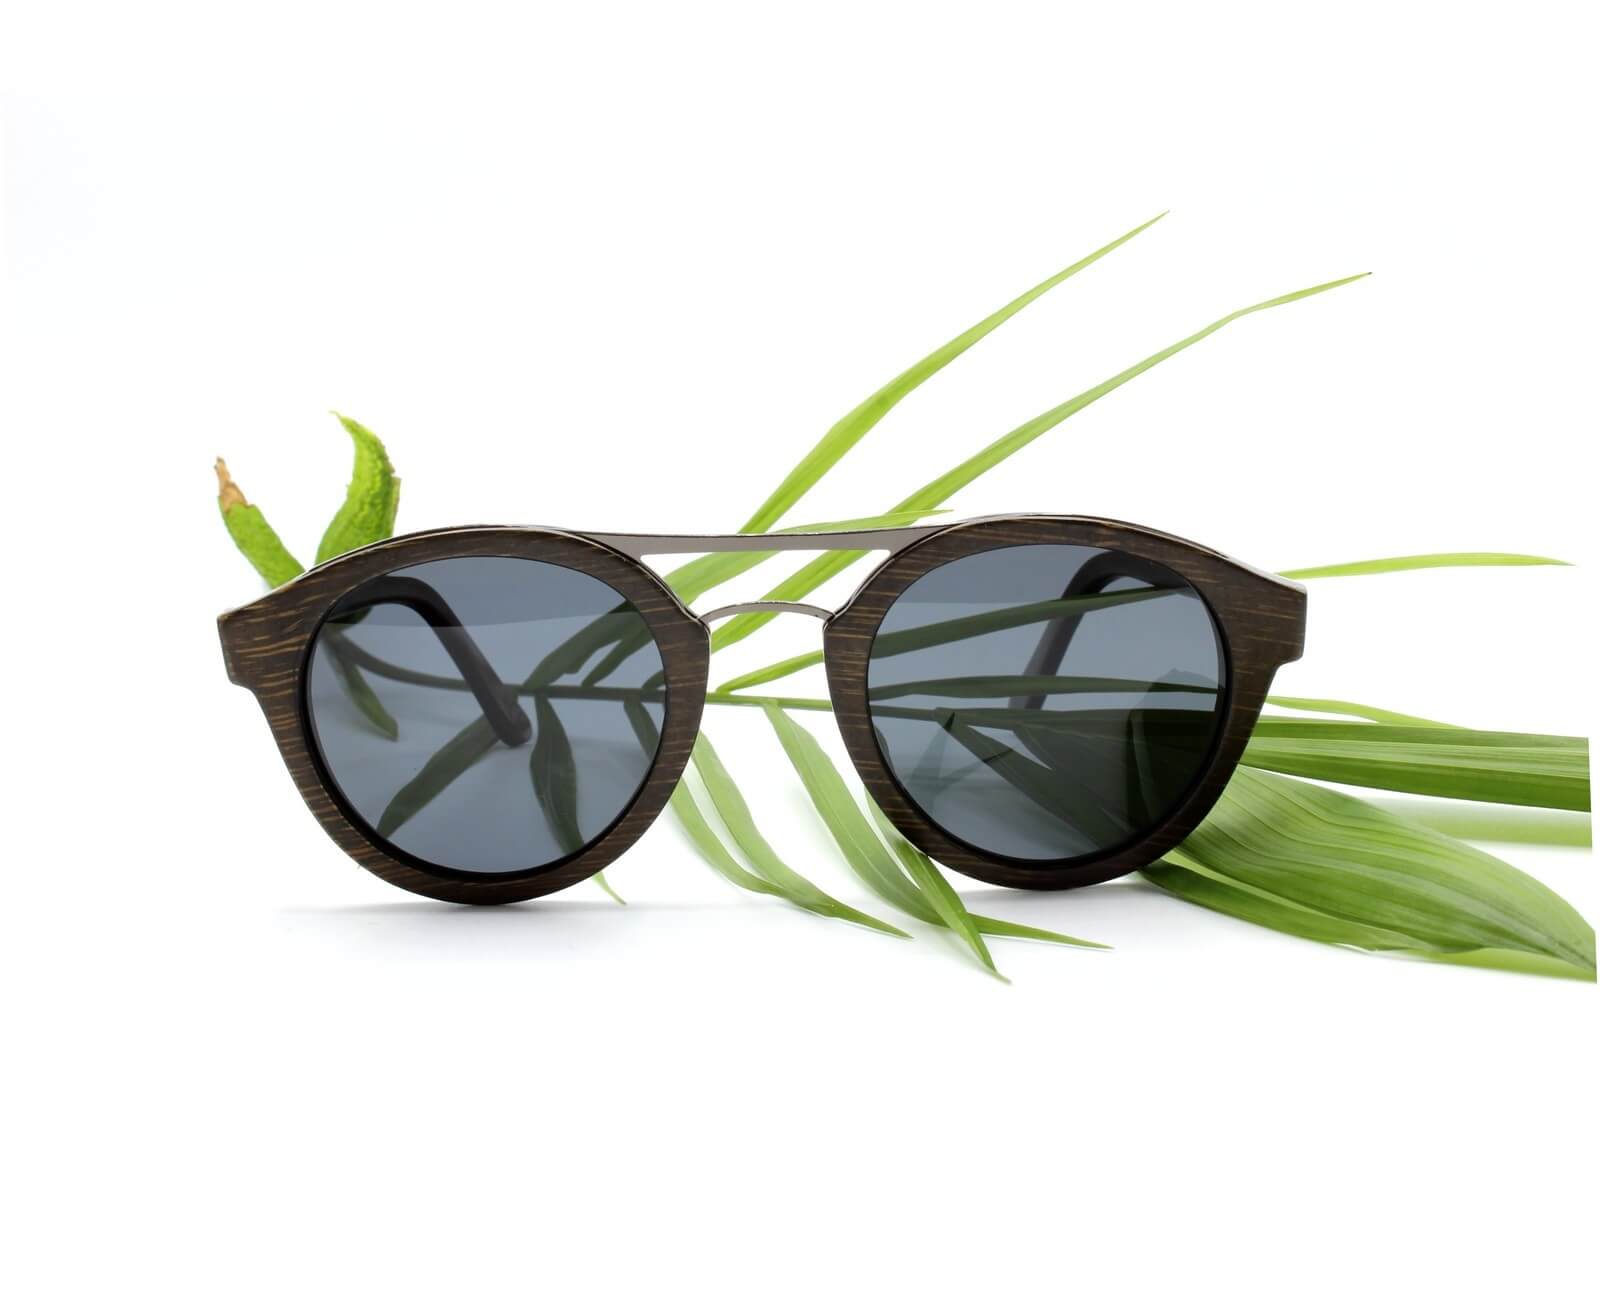 Wood Sunglasses, WOODEN SHADE®